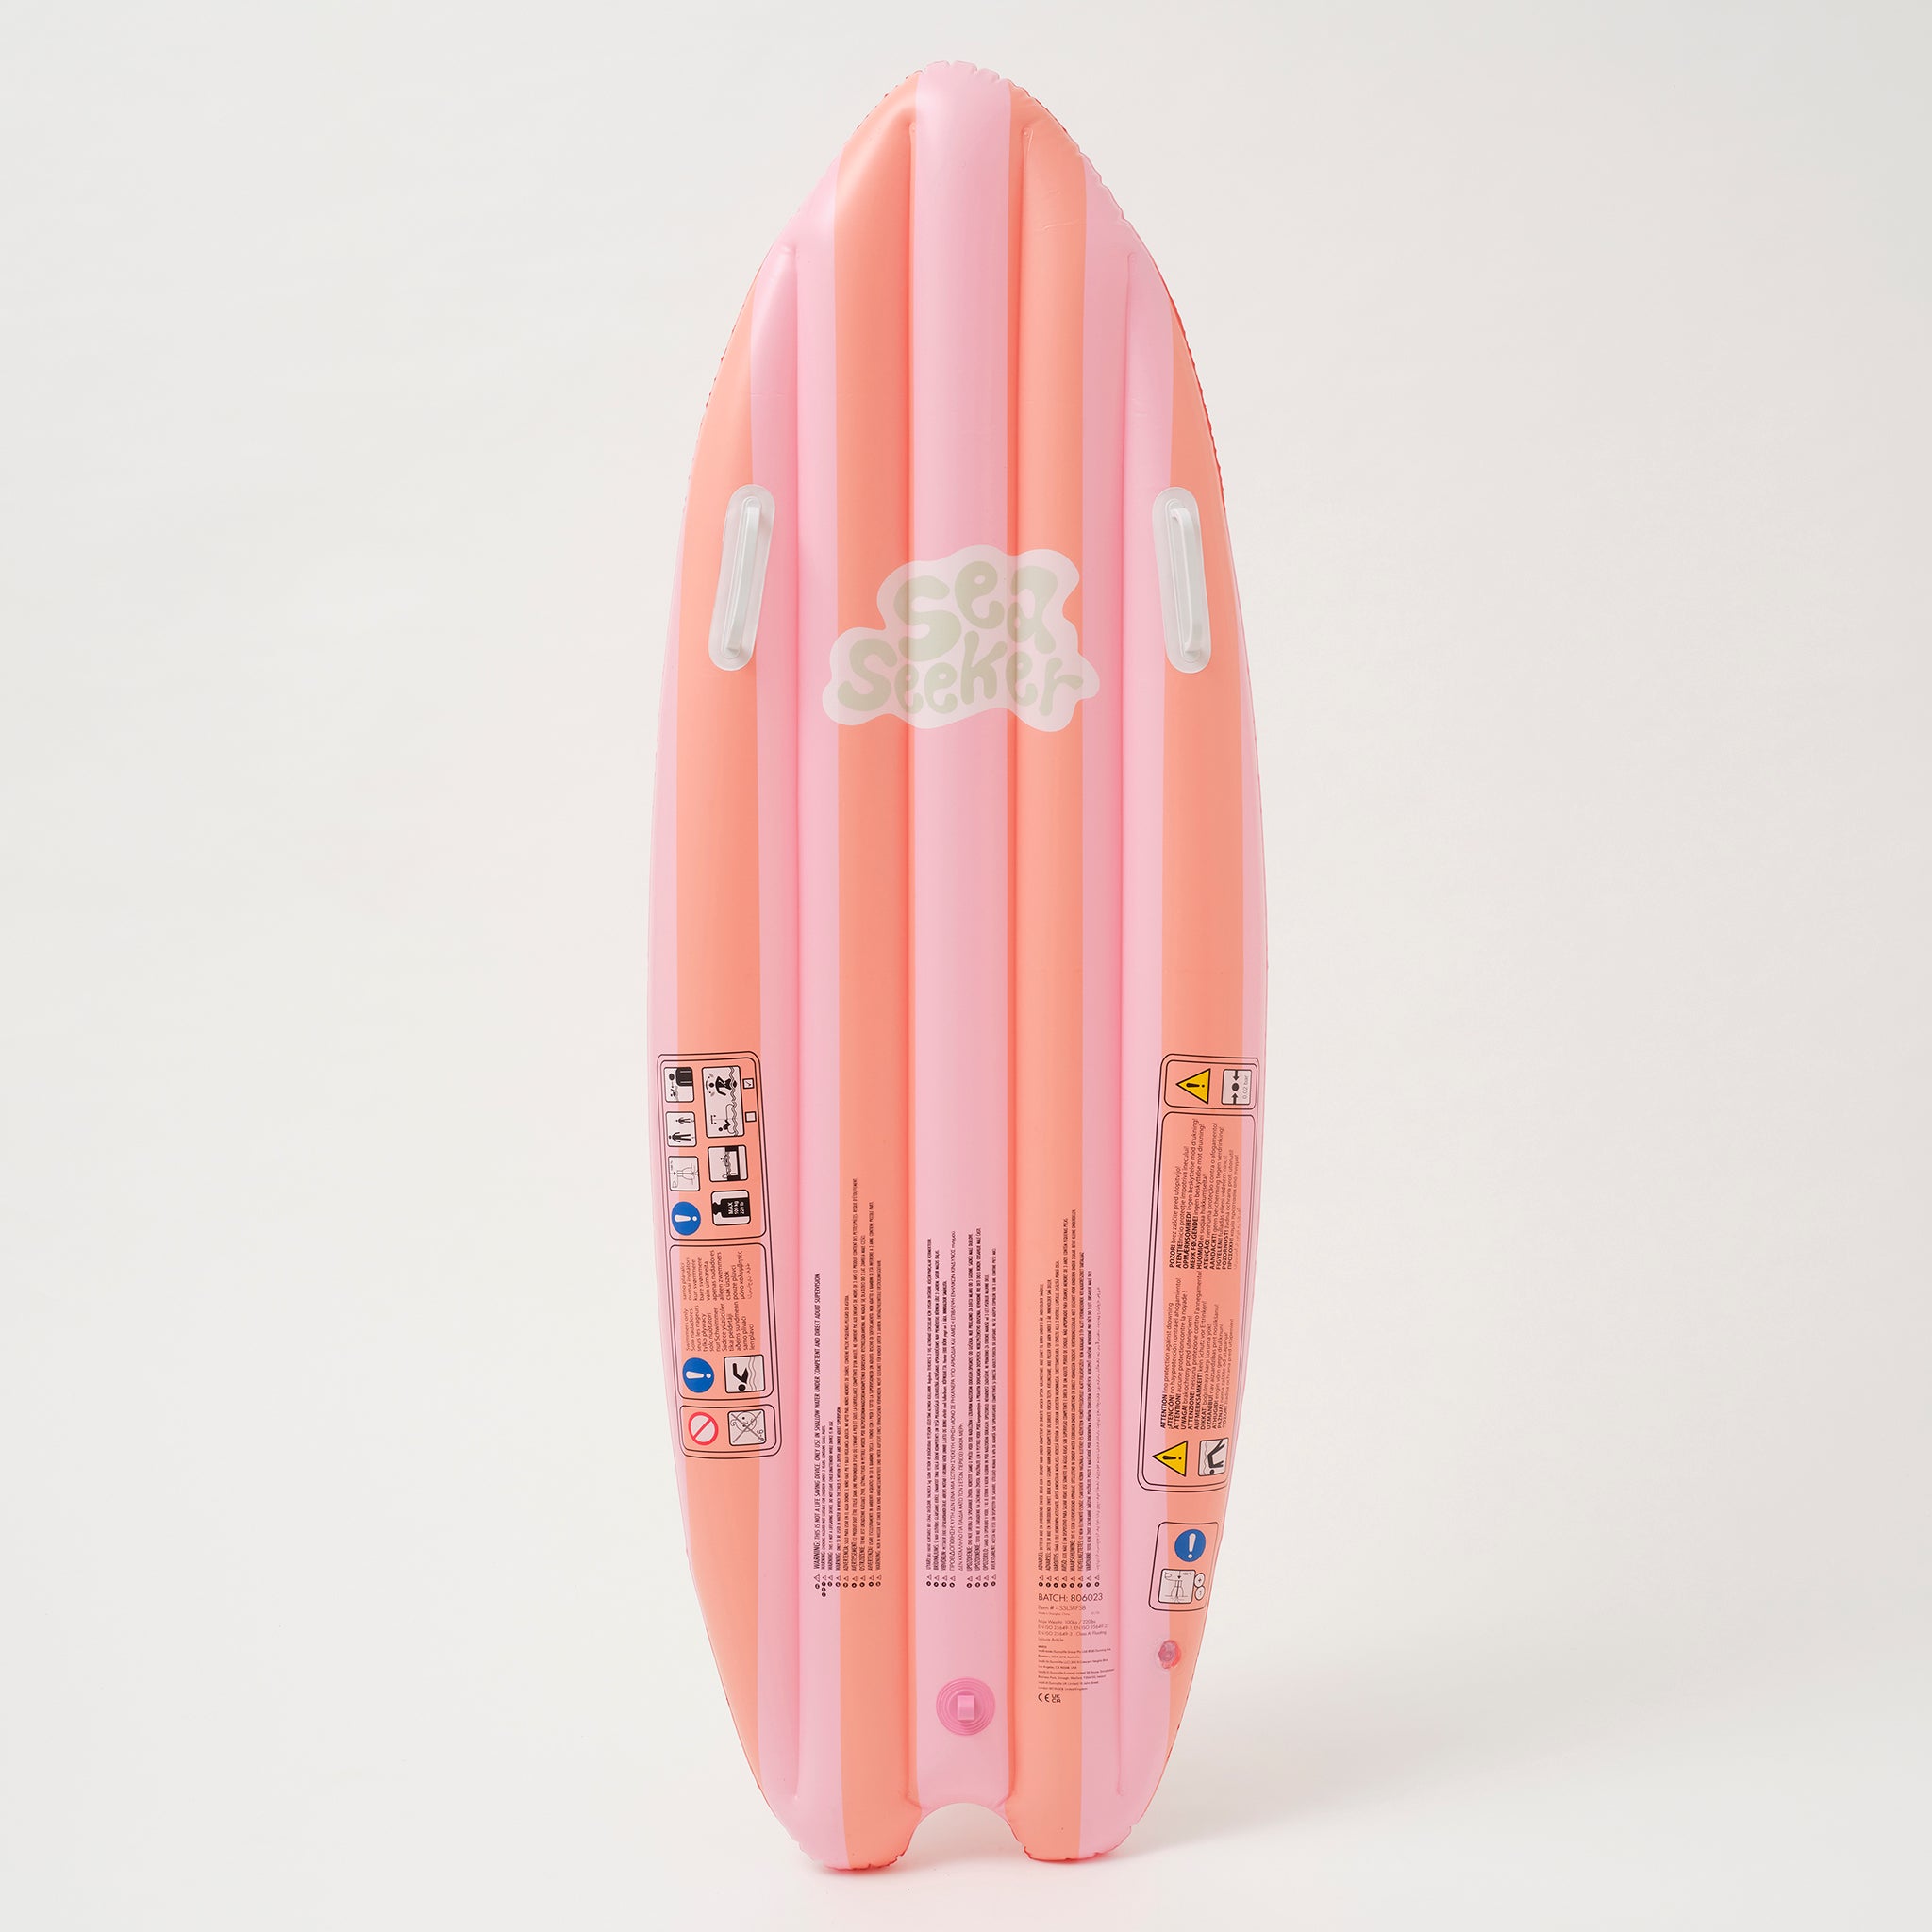 Ride With Me Surfboard Float | Sea Seeker Strawberry